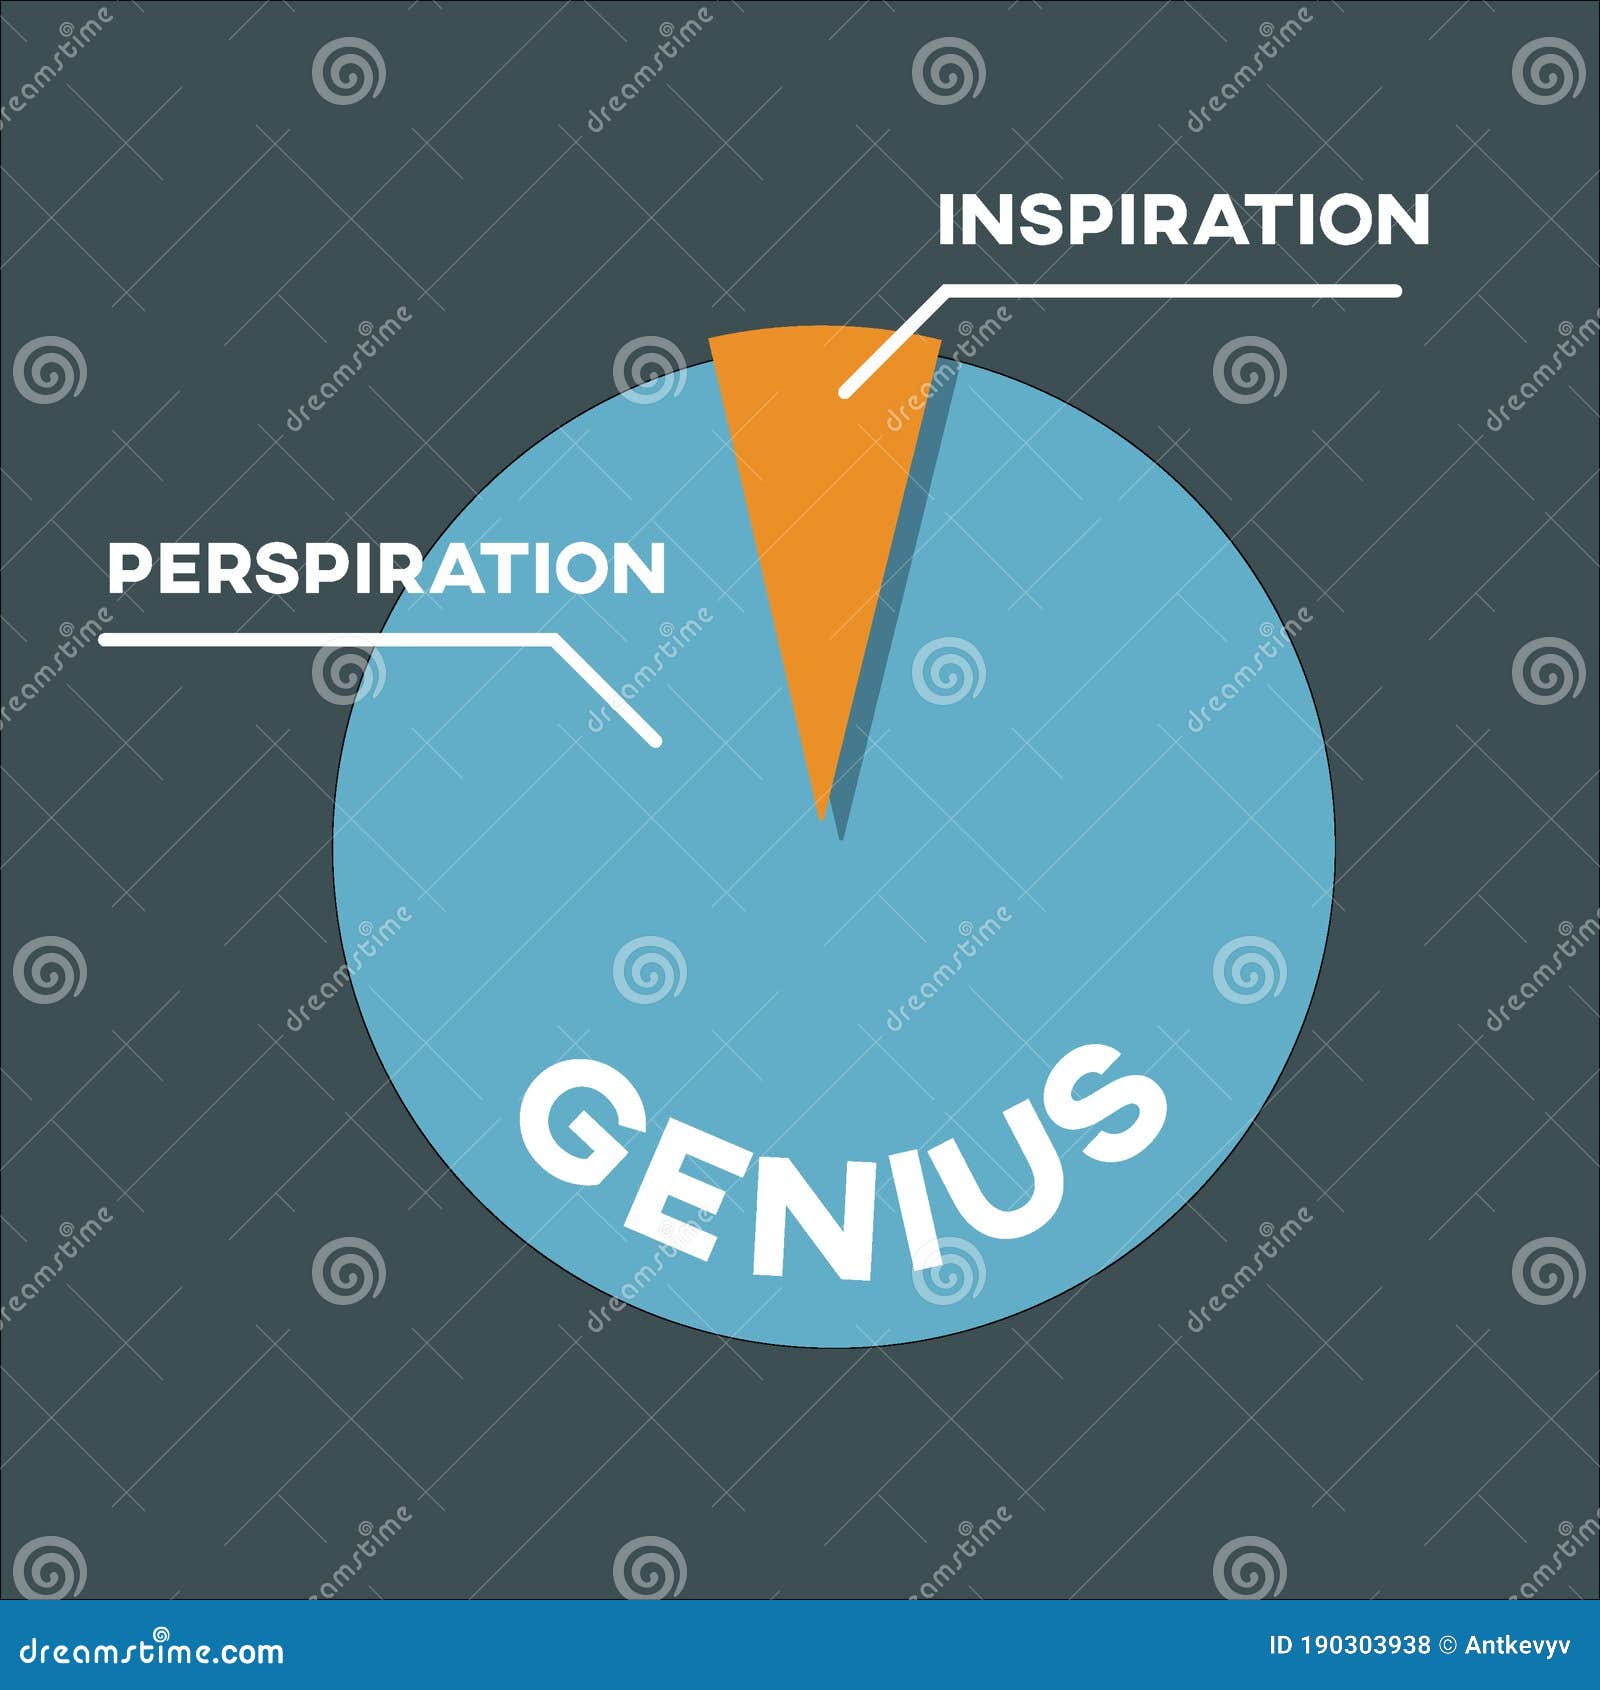 genius pie chart definition inspiration perspiration